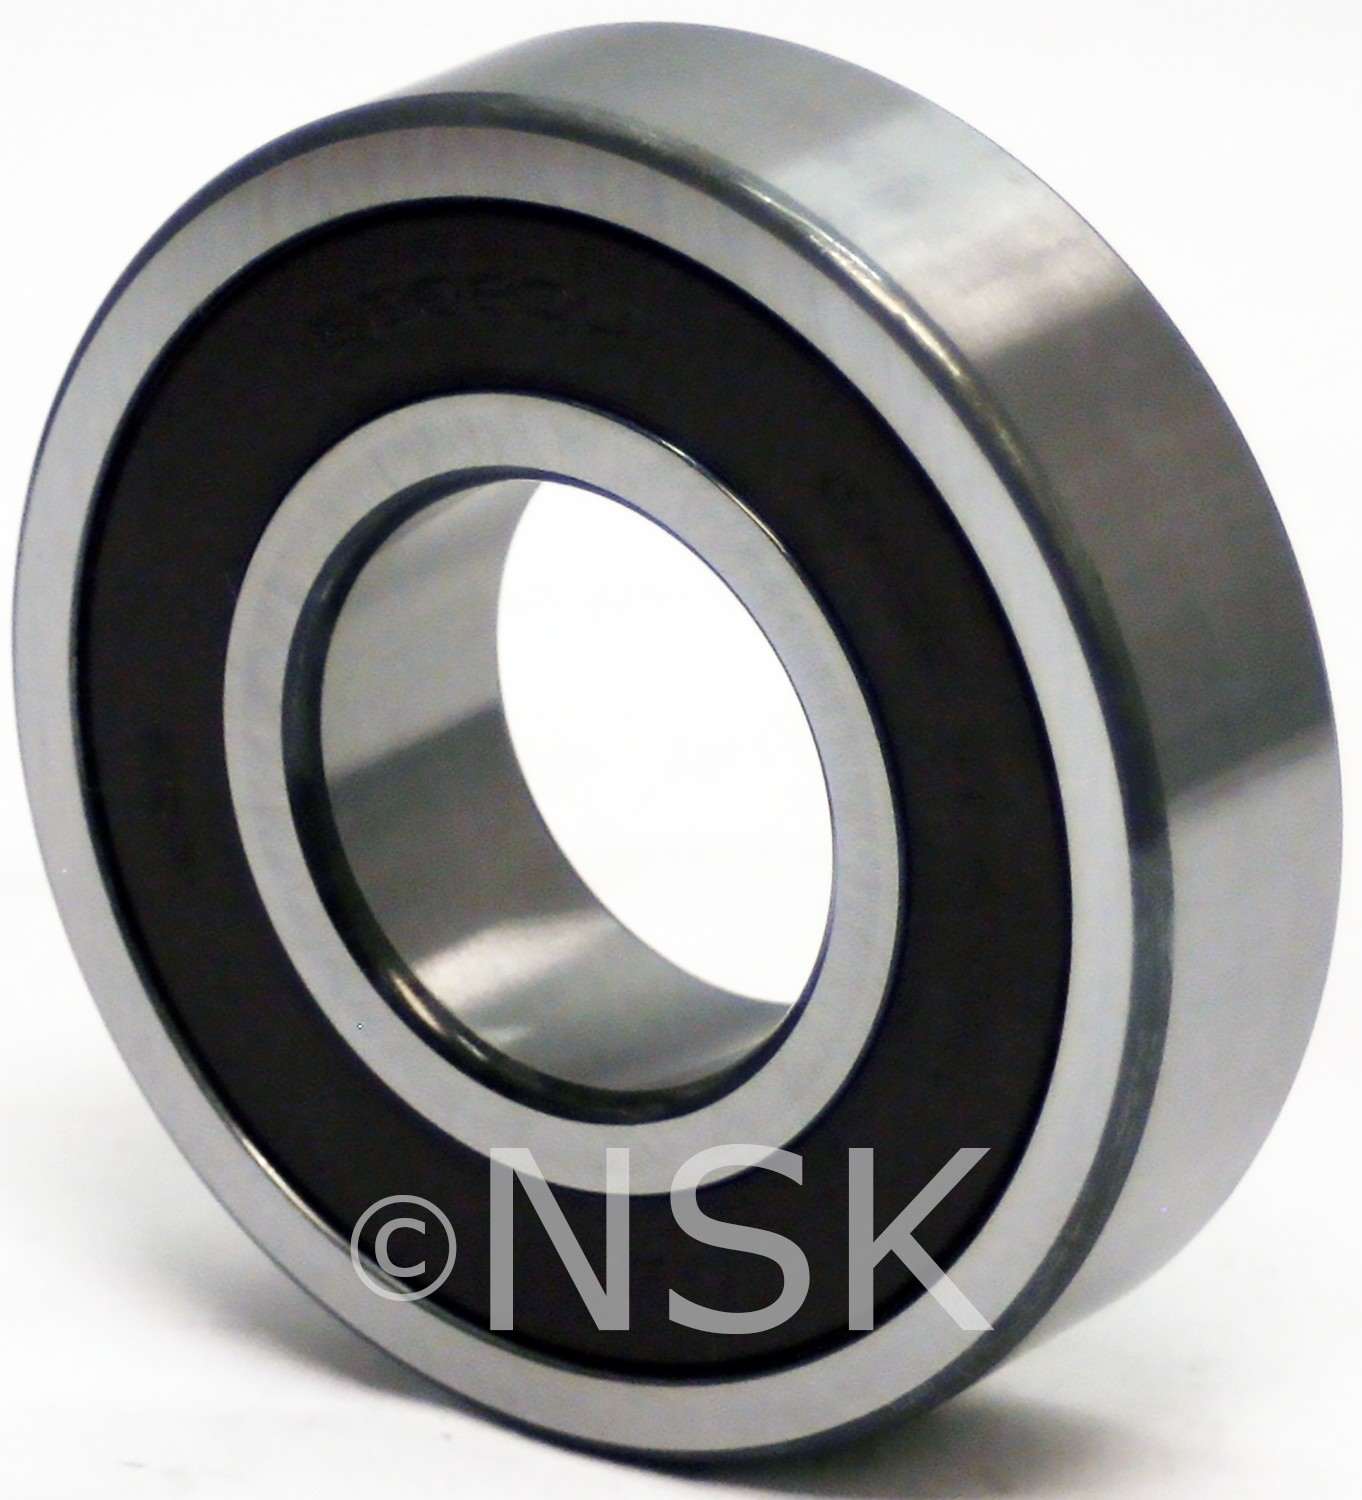 nsk drive axle shaft bearing  frsport 6308adduc4